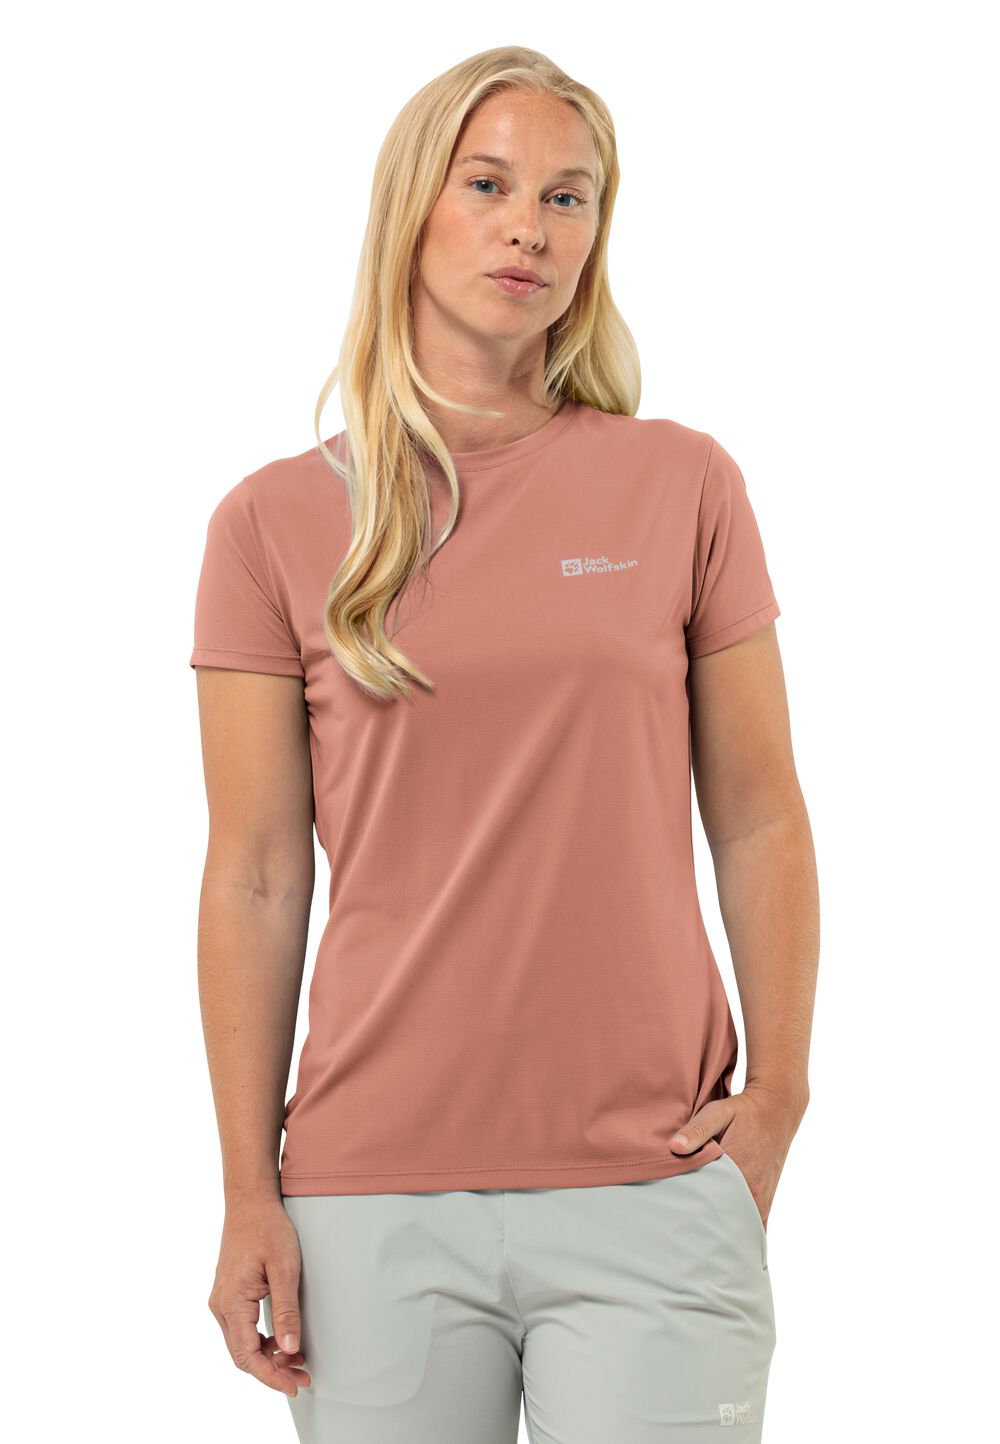 Jack Wolfskin Prelight Trail T-Shirt Women Functioneel shirt Dames S bruin astro dust